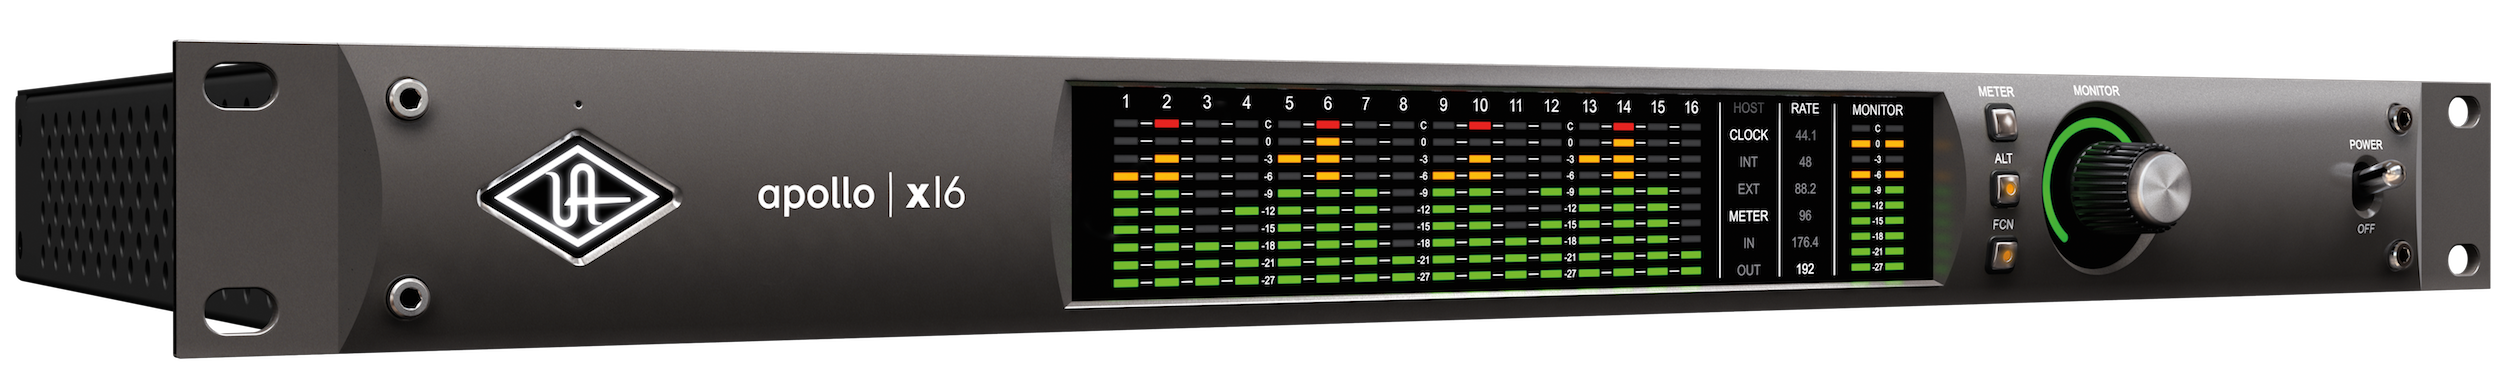 Universal Audio Apollo X16 - Interface de audio thunderbolt - Variation 3